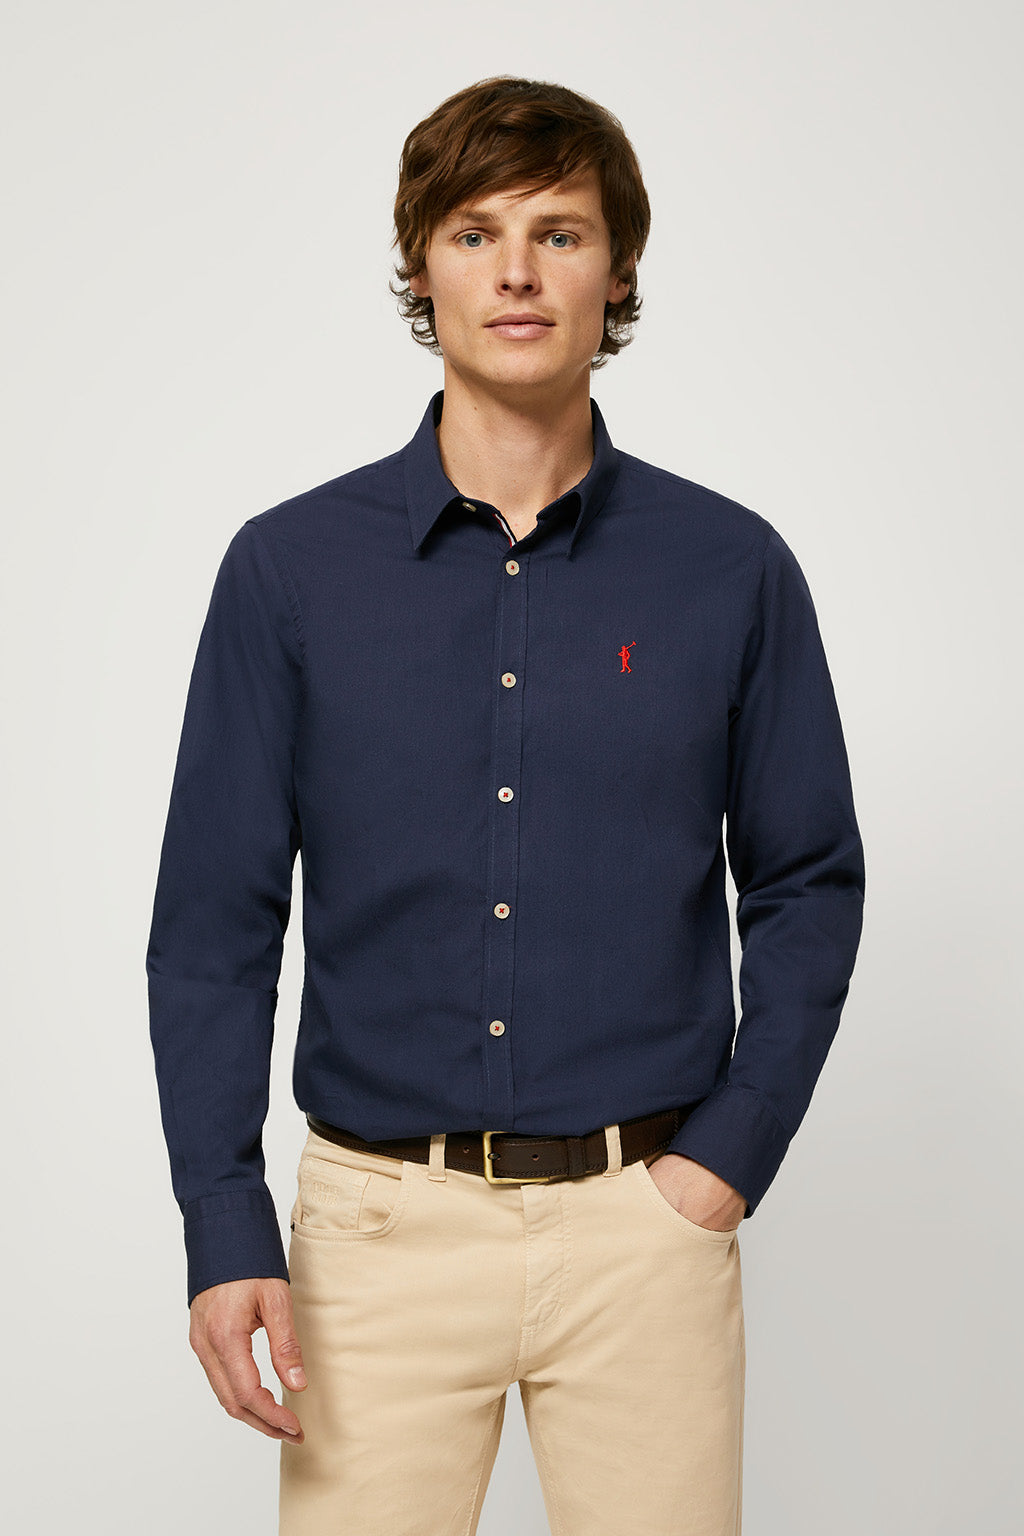 Camisa slim fit azul marino con logo bordado – Polo Club